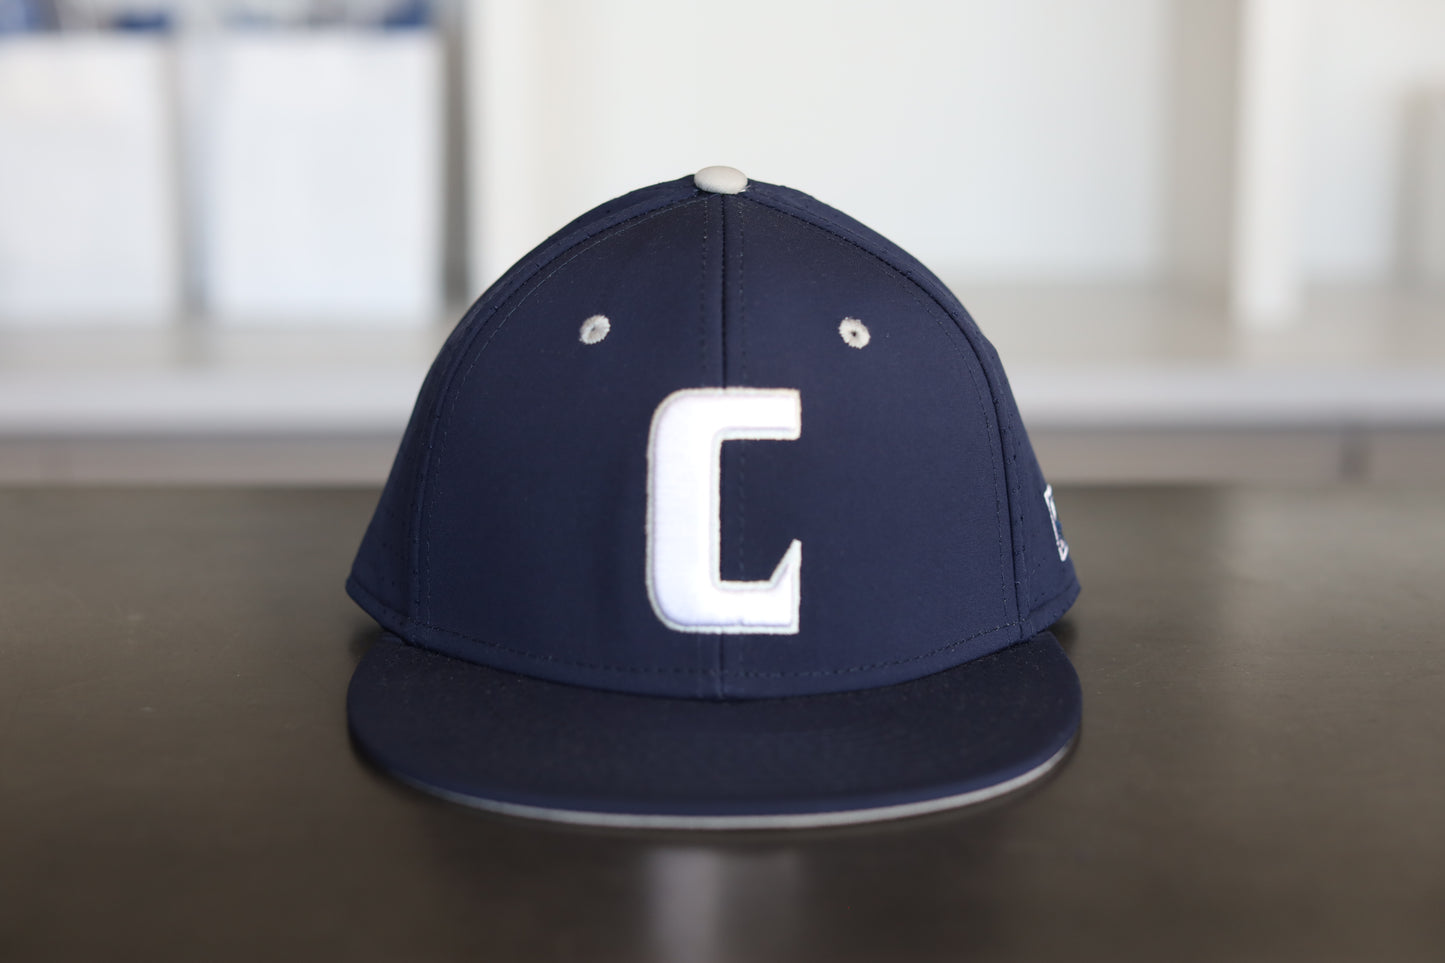 Casady "C" Baseball Cap